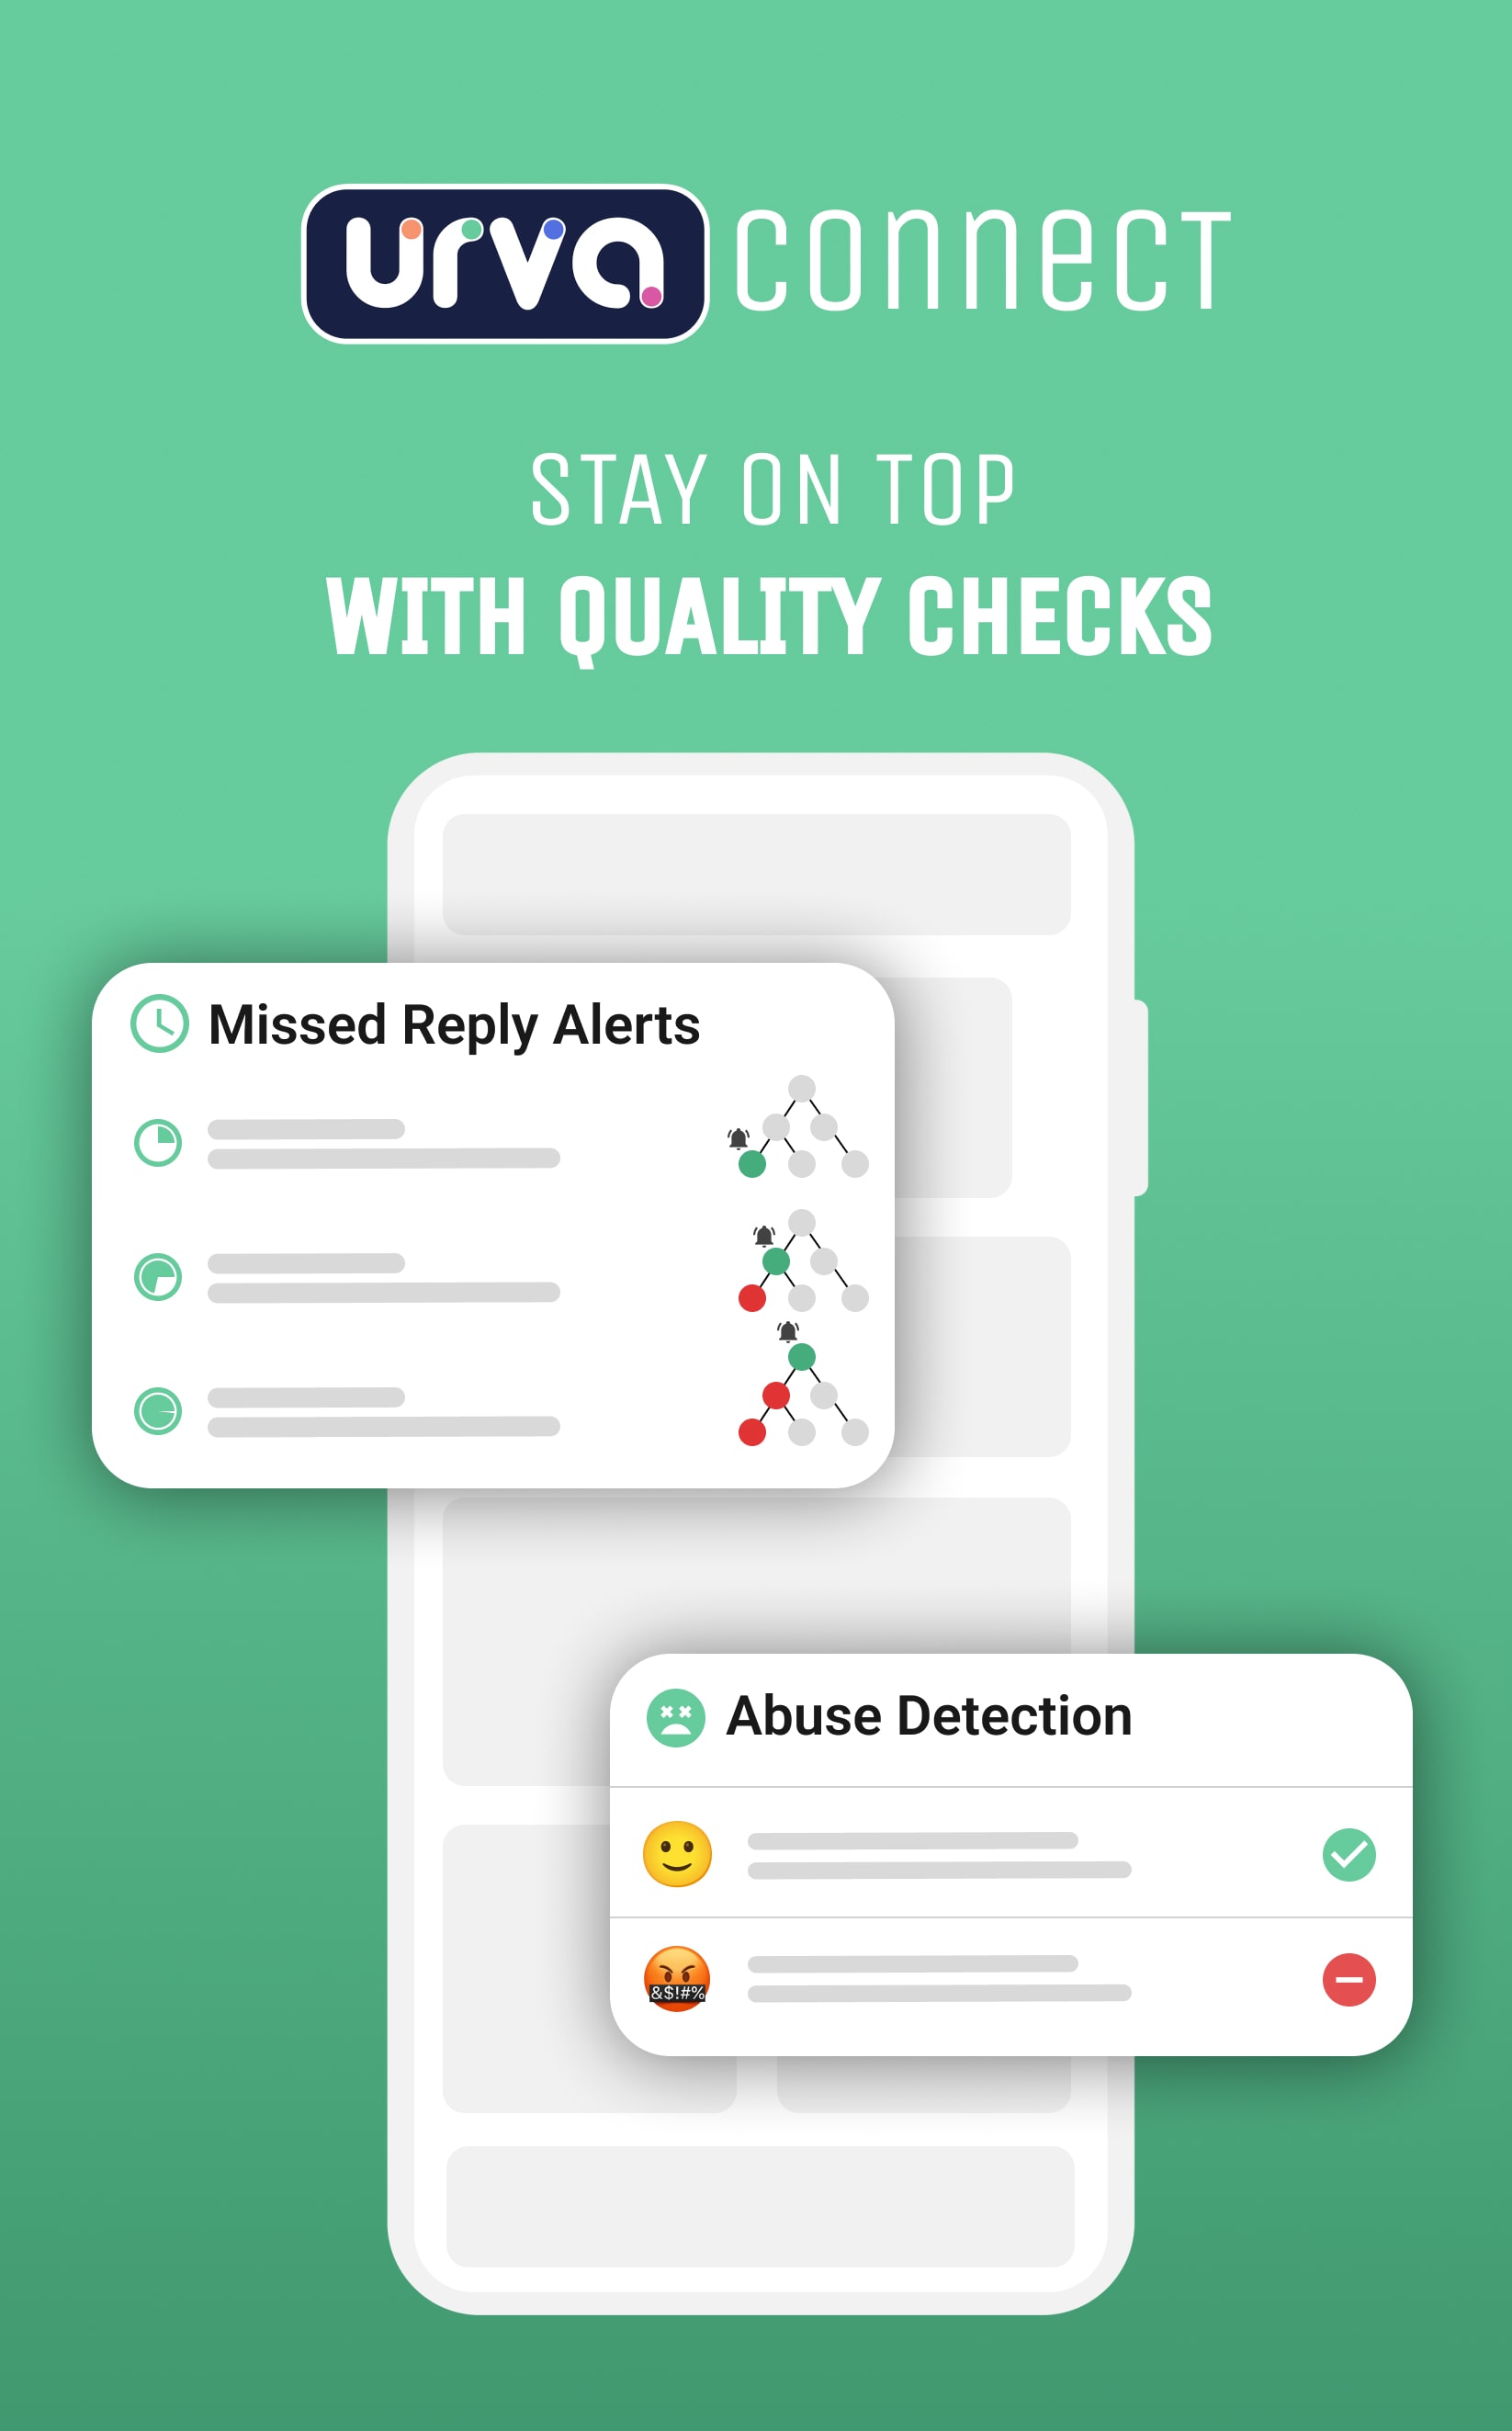 URVA Connect quality checks